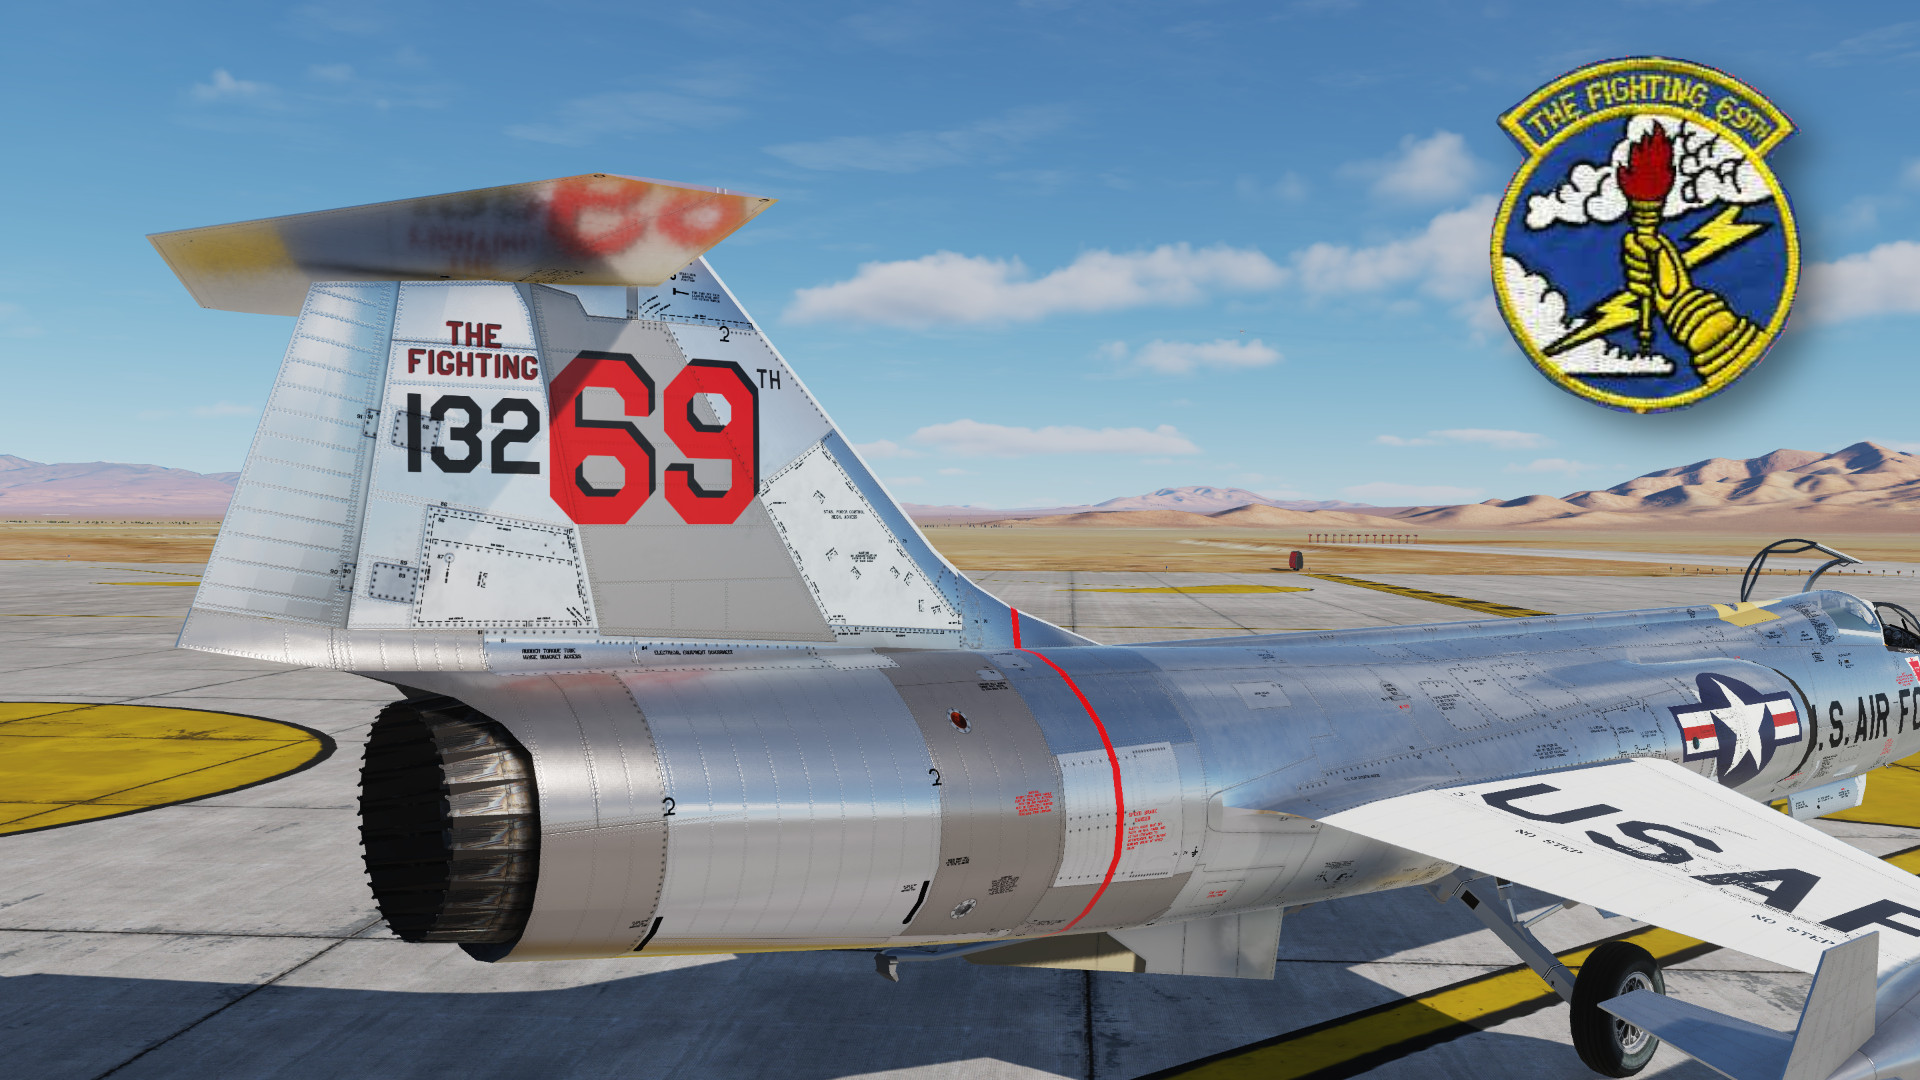 f-104-starfighter-usaf-luftwaffe-the-fighting-69th-skin